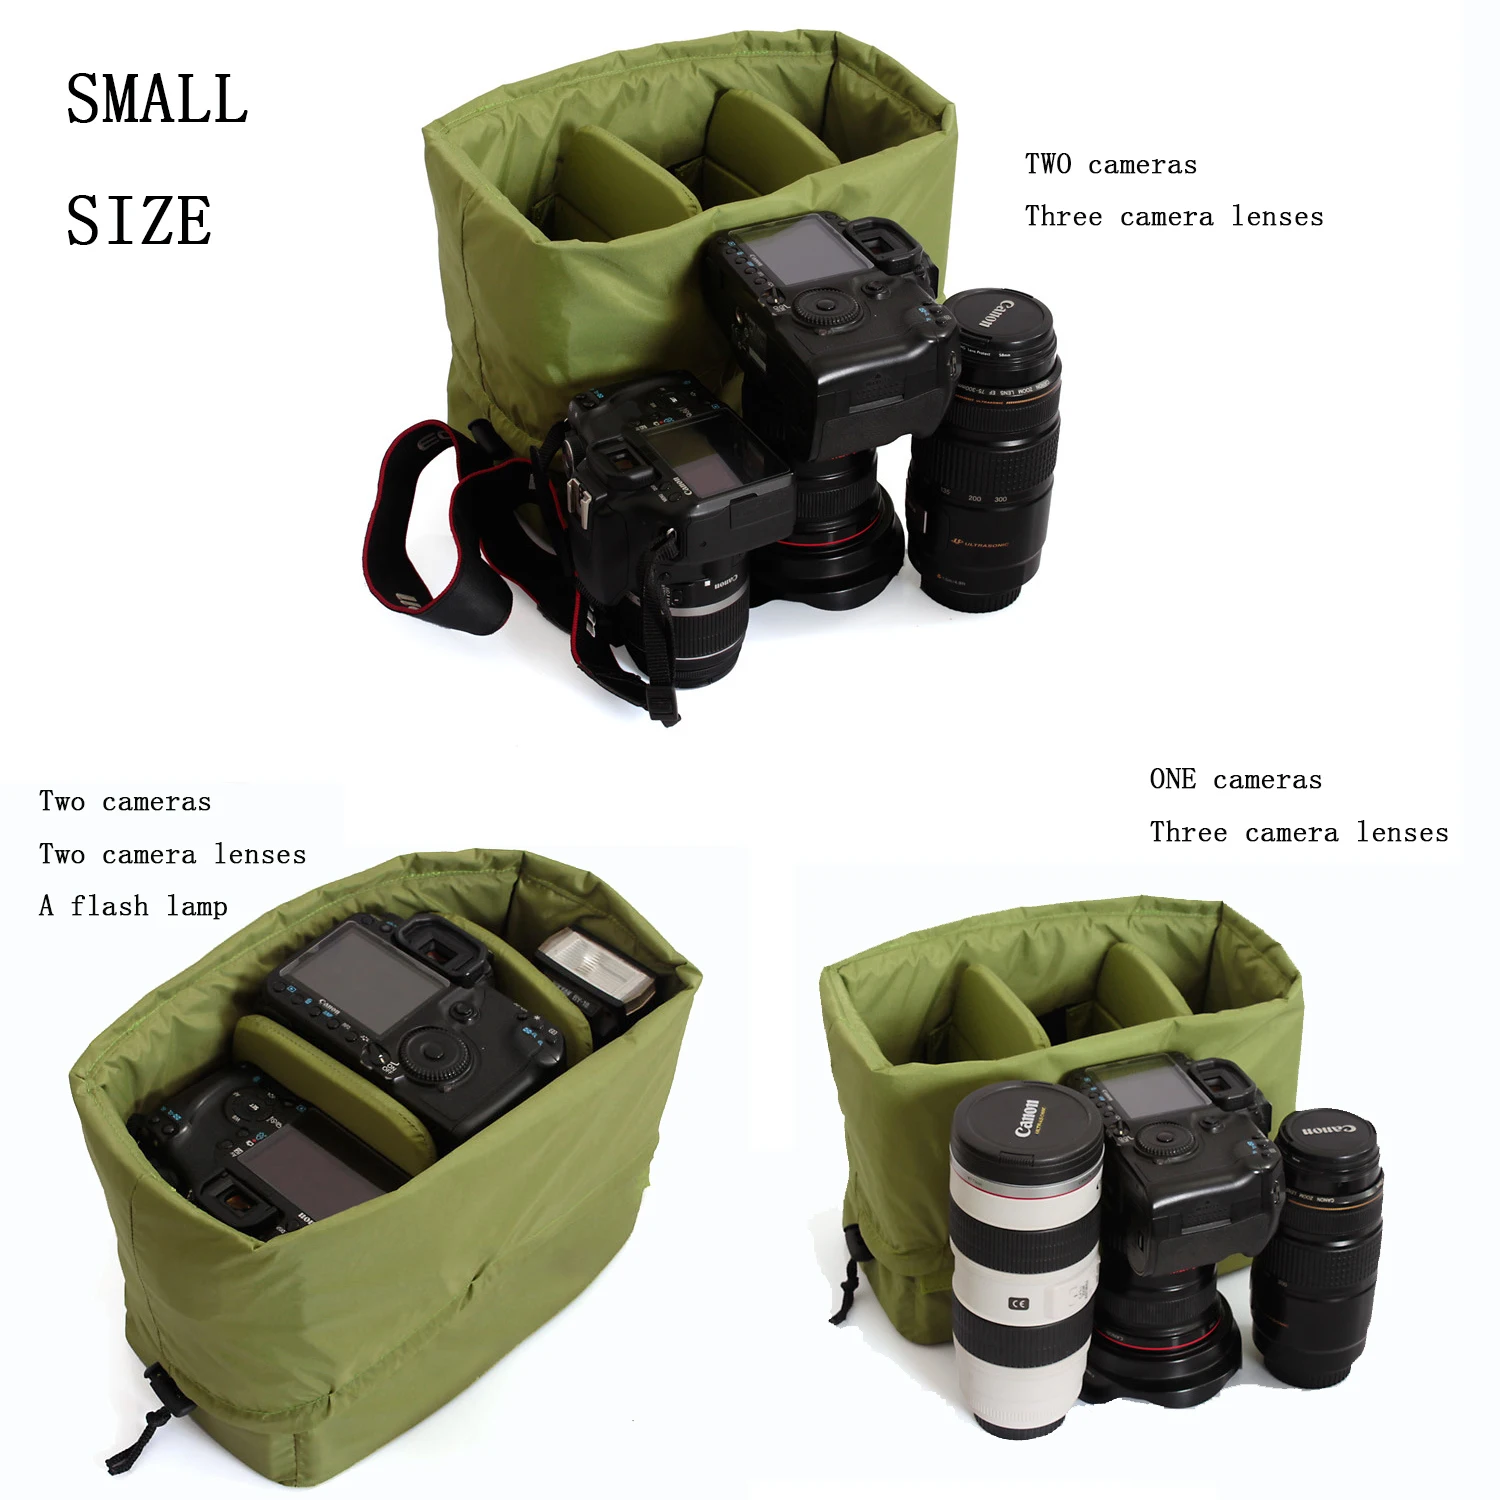 Careell видео камера вкладыш сумка вставки и отсеки чехол для Canon Nikon цифровой SLR/DSLR камеры s sony Rx100 и объектив C305